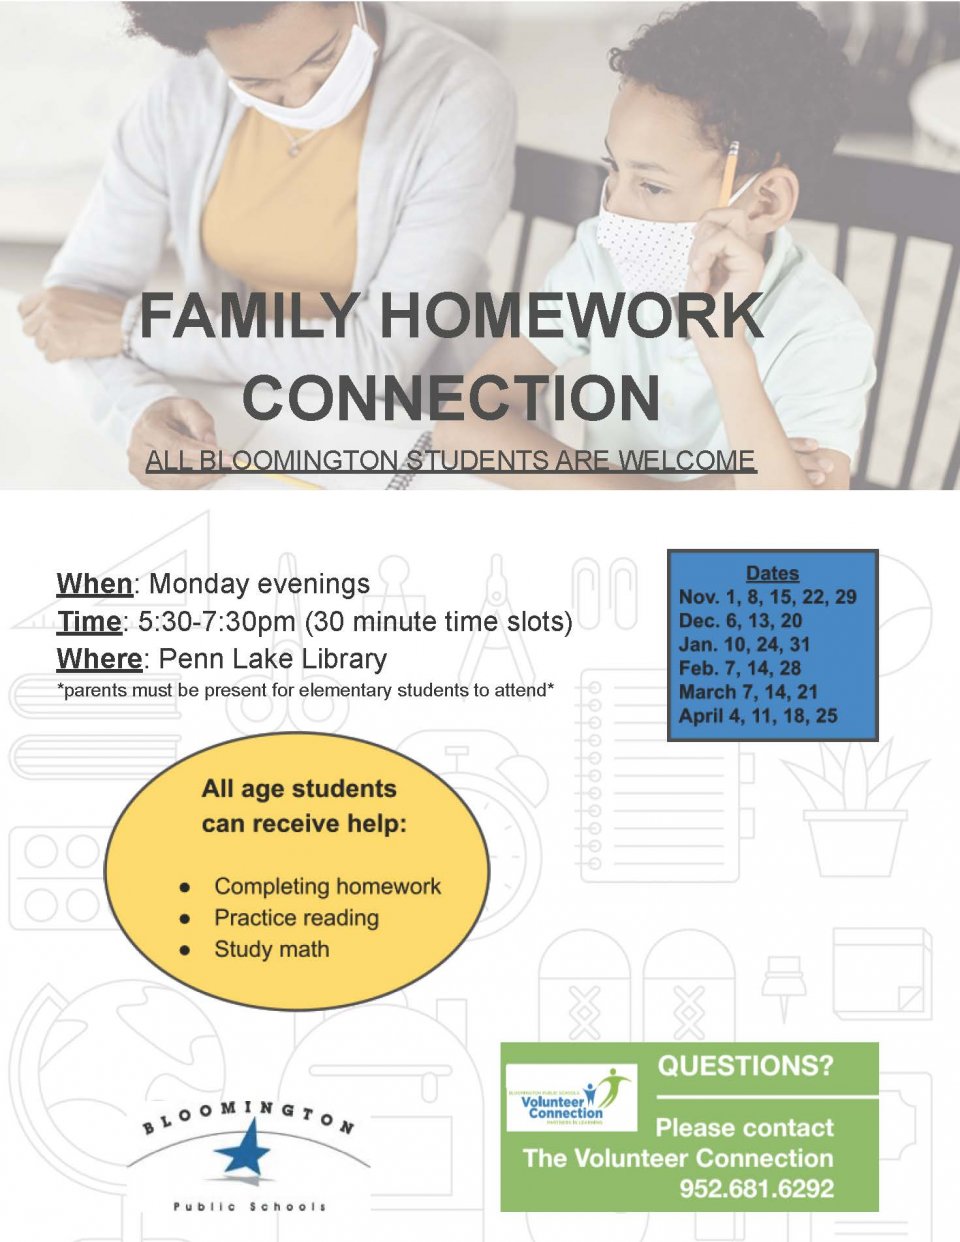 Homework Connection Flyer_Penn